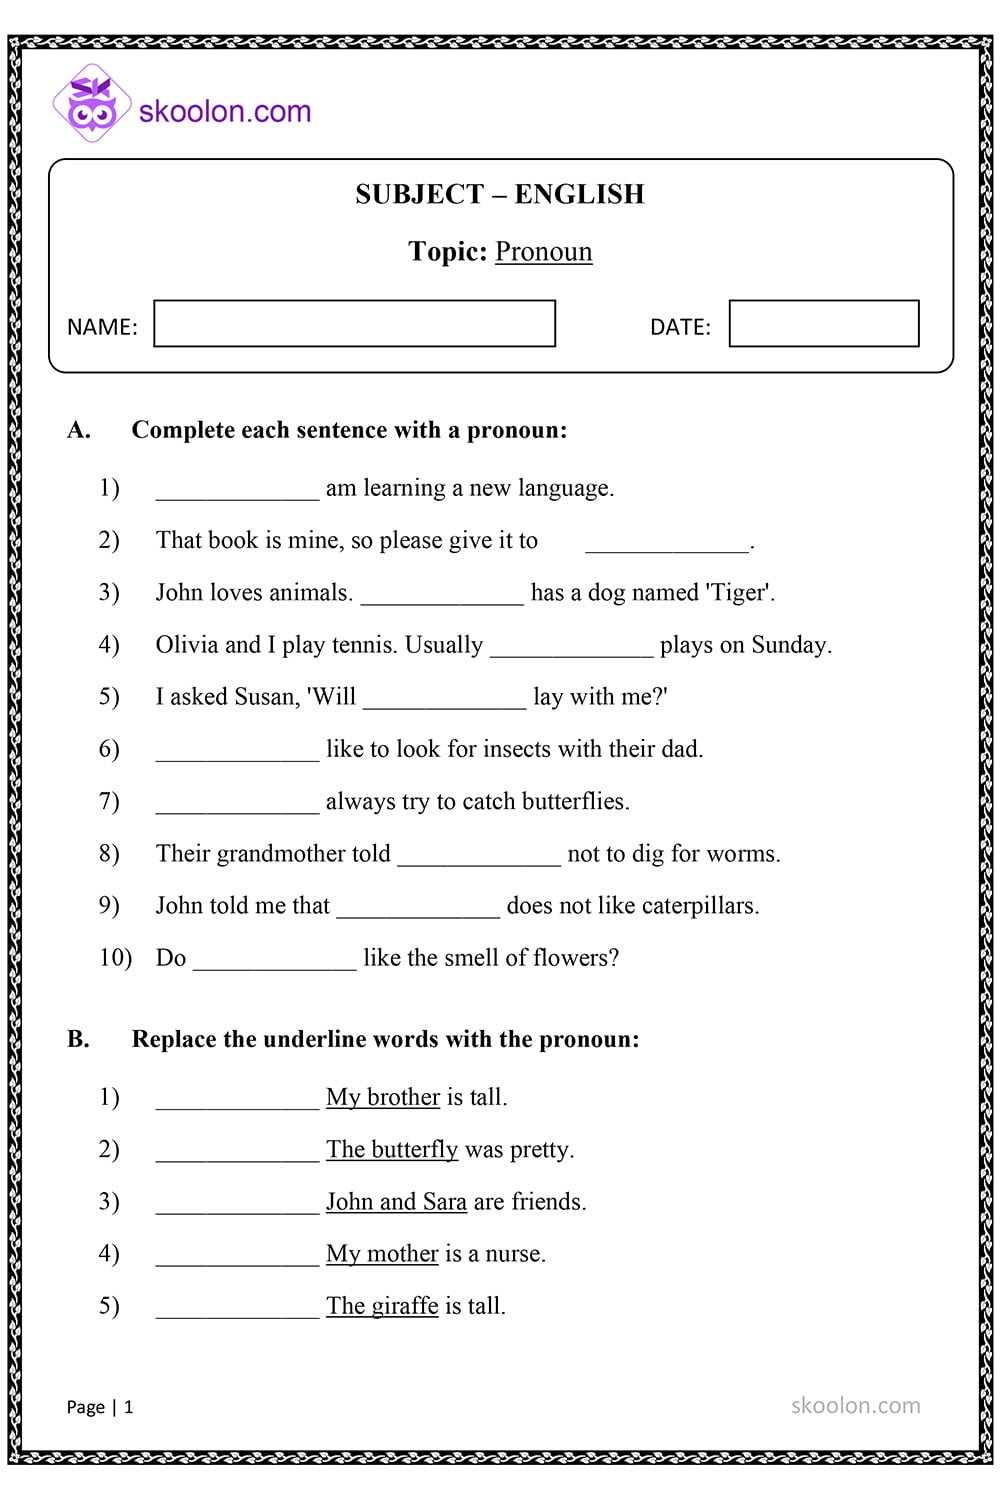 Pronouns Live Worksheet For Grade 2